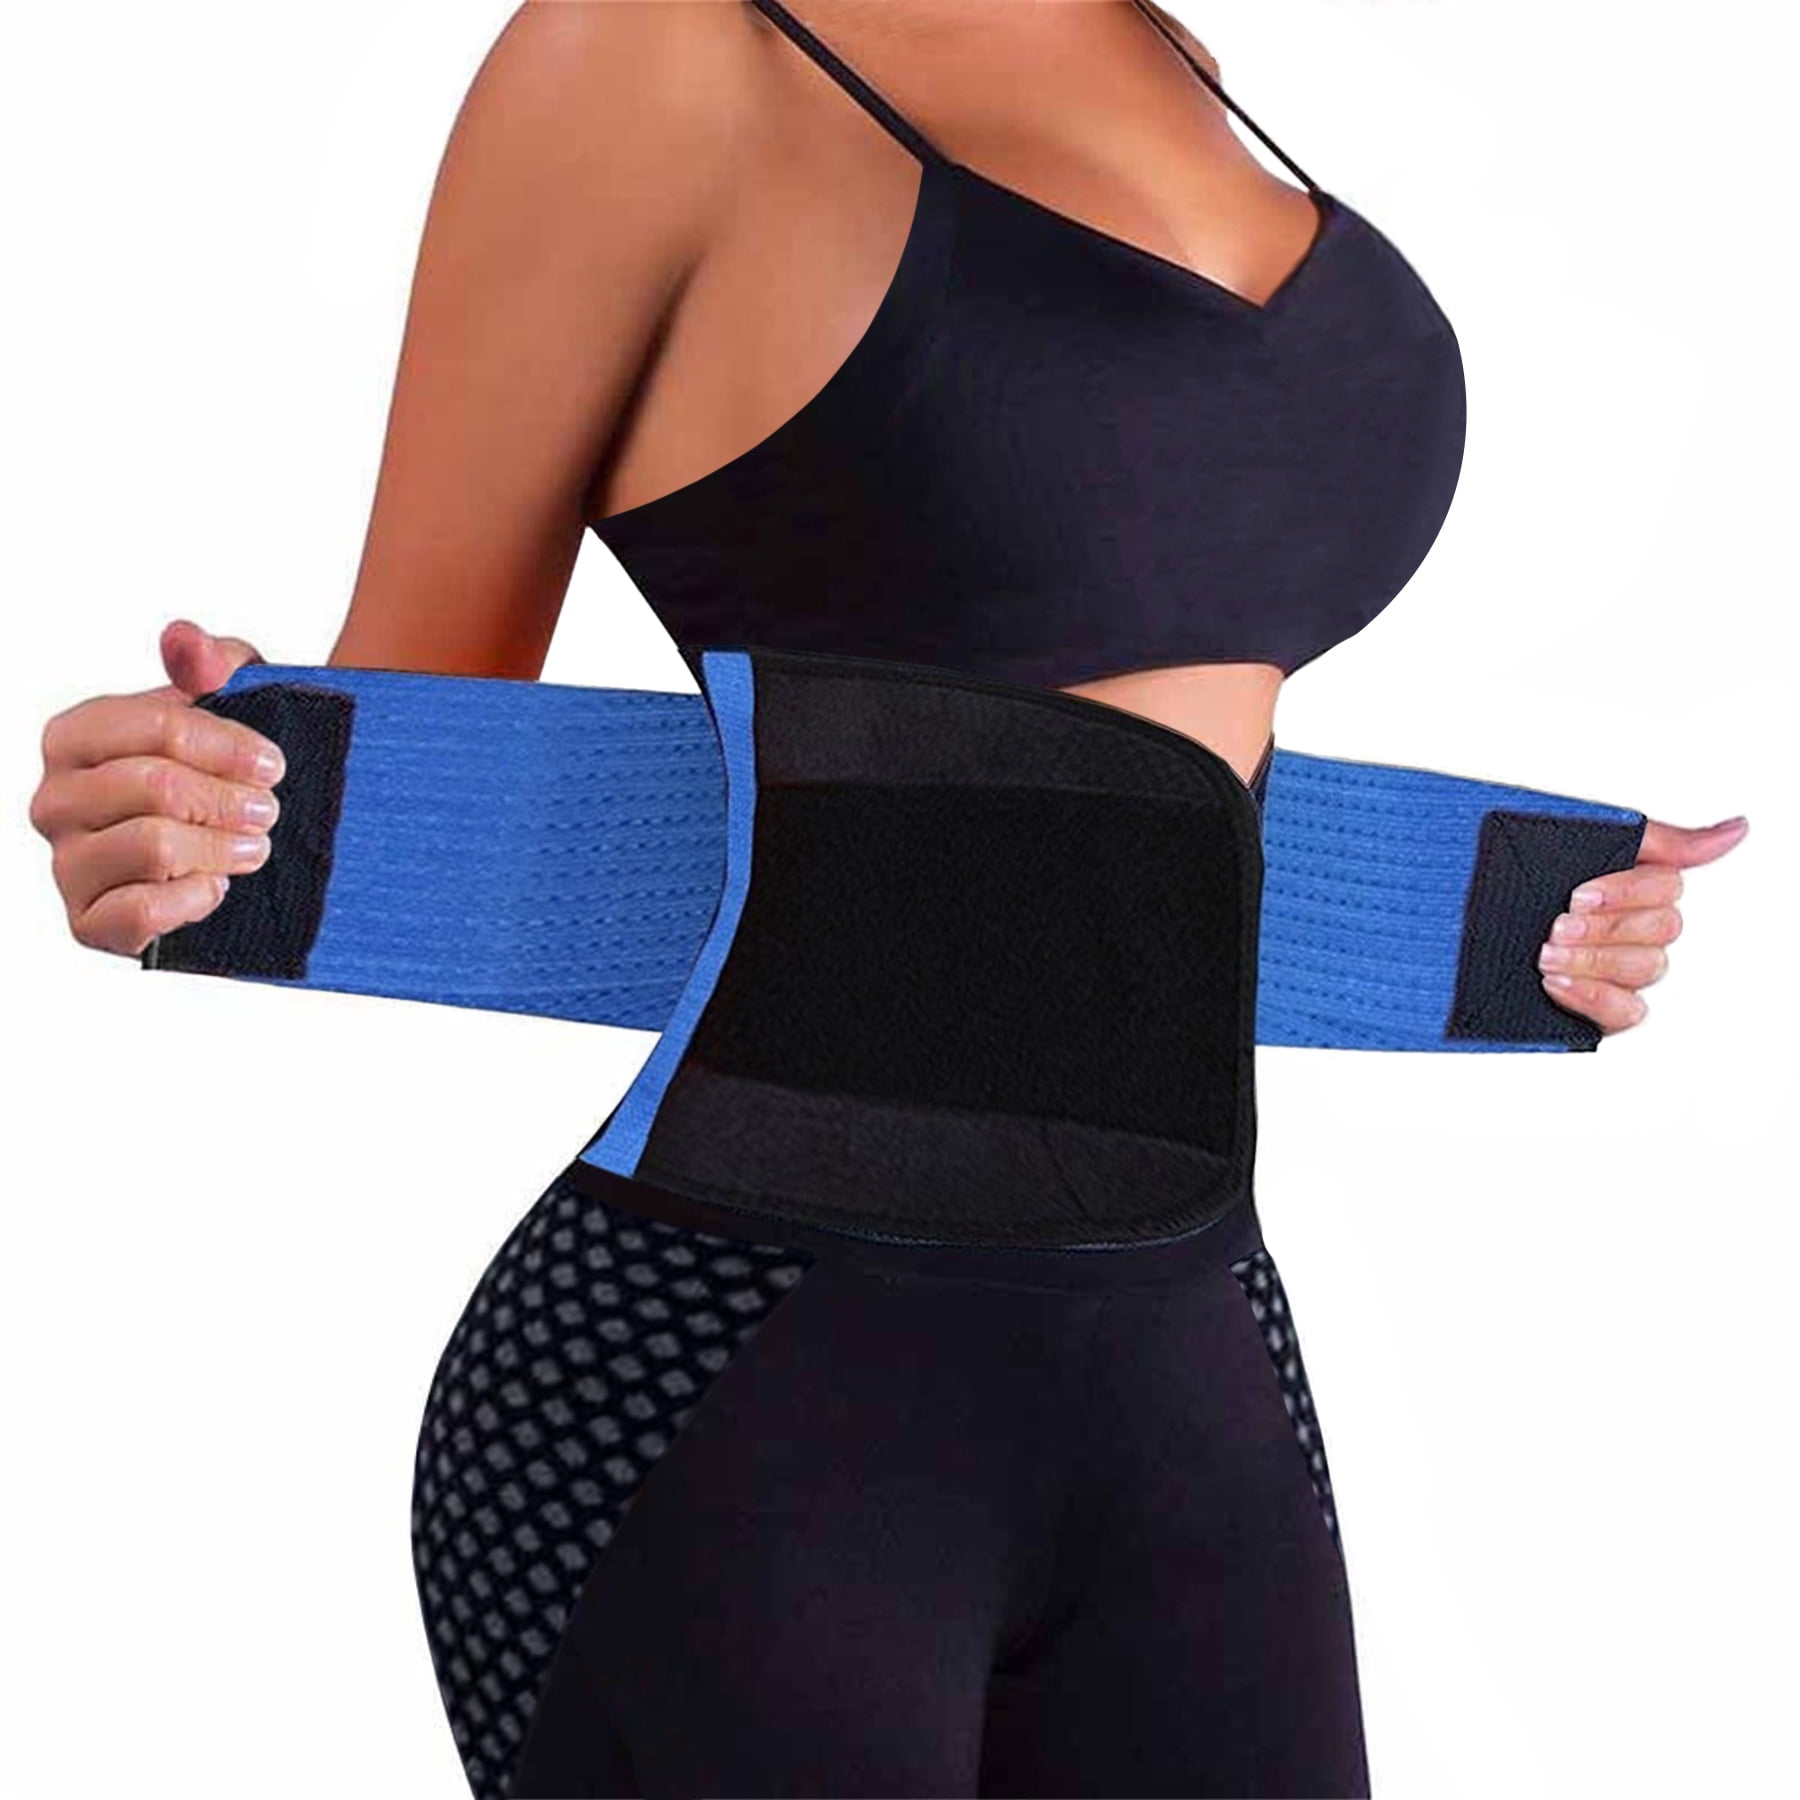 Details about   Women's Body Shaper Waist Trainer Neoprene Band Slimmer Sweat Belt Control Tummy 